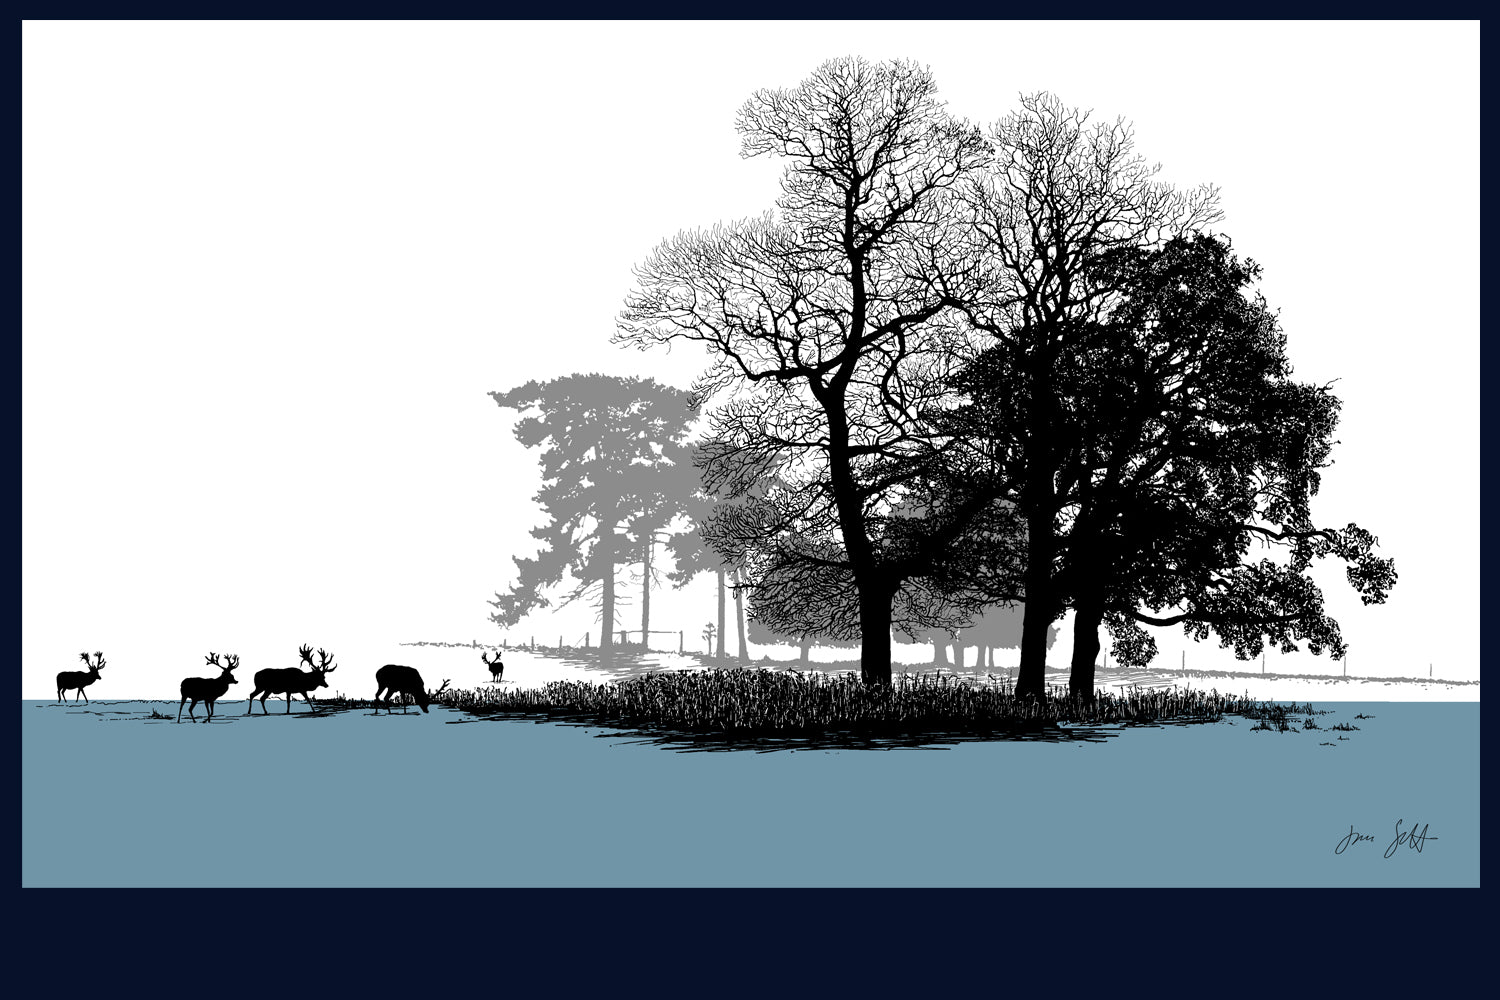 Framed Deer at Holkham, Norfolk. Land Song Fine Art Print - available in 9 colours